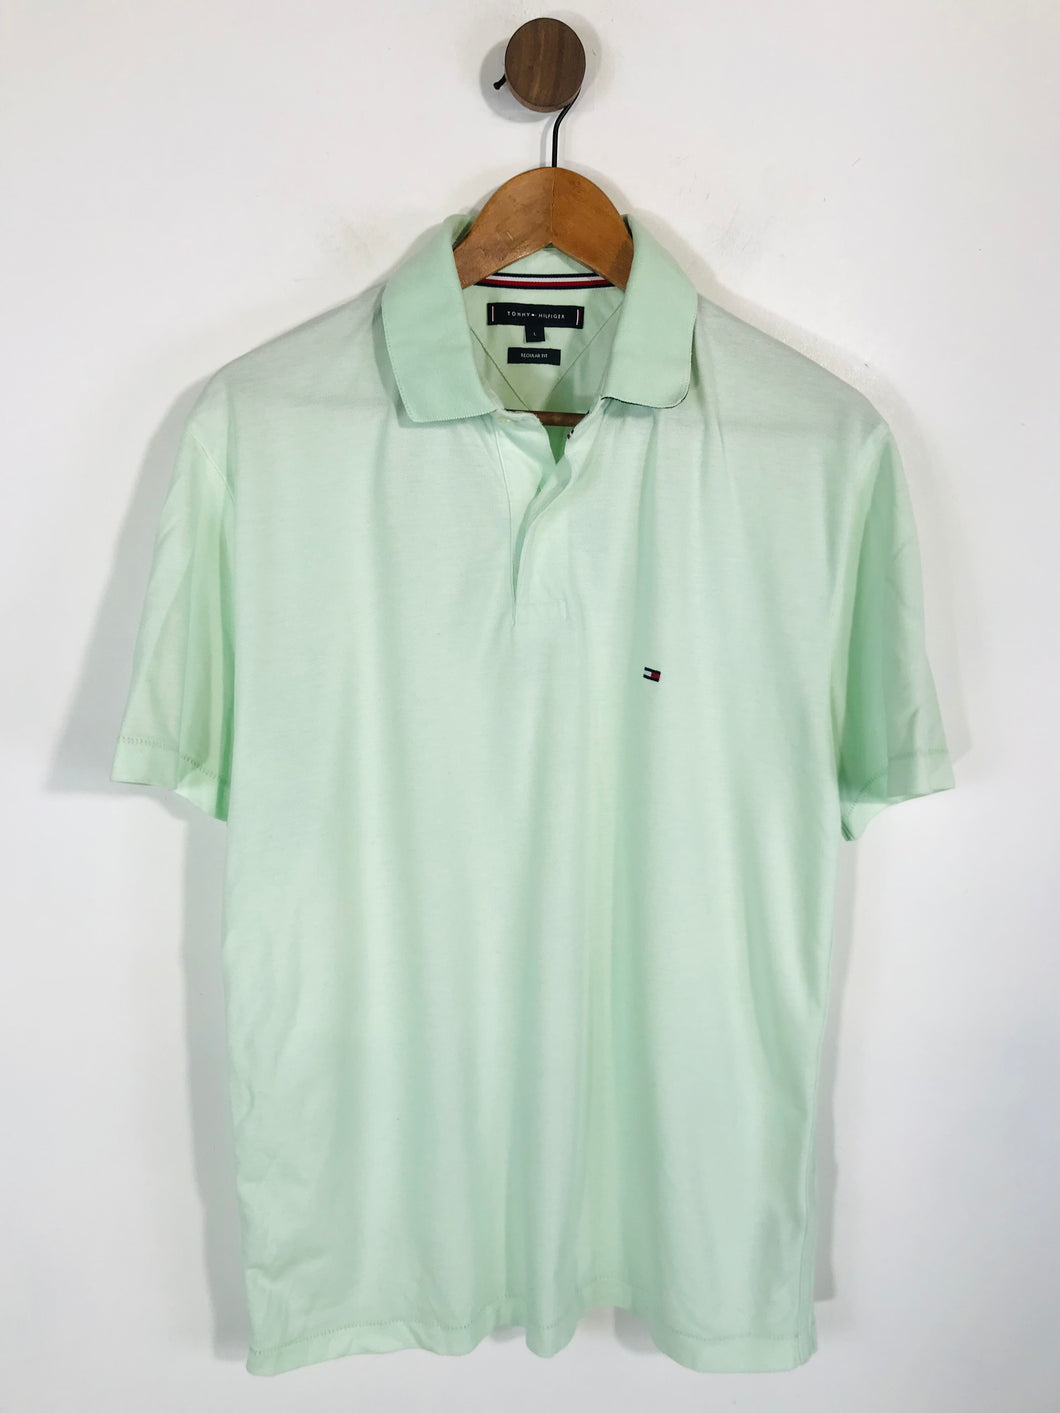 Tommy Hilfiger Men's Polo Shirt | L | Green